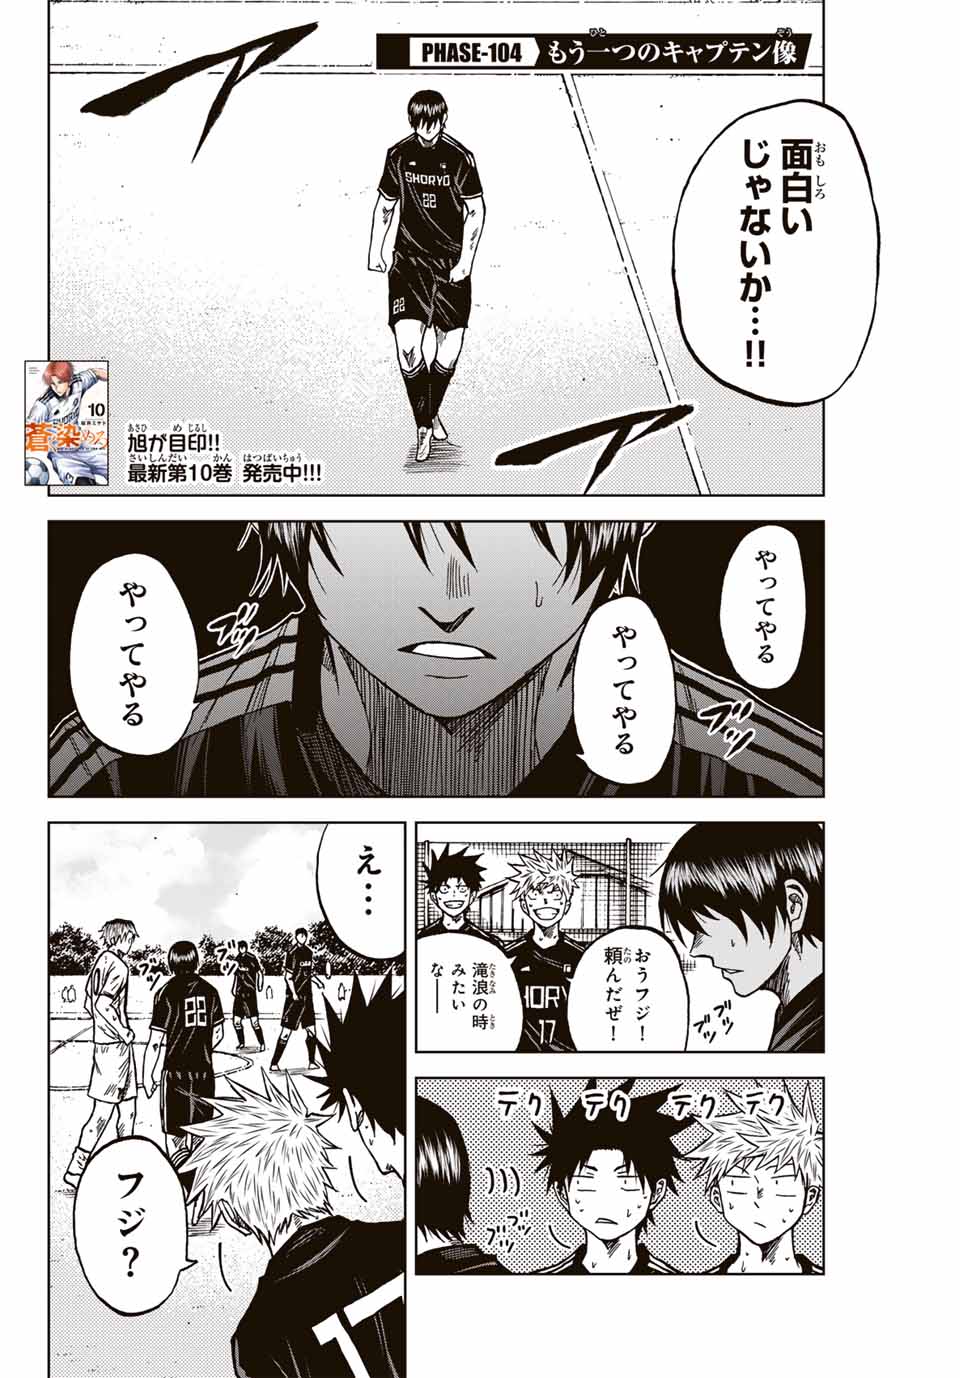 Aoku Somero - Chapter 104 - Page 2